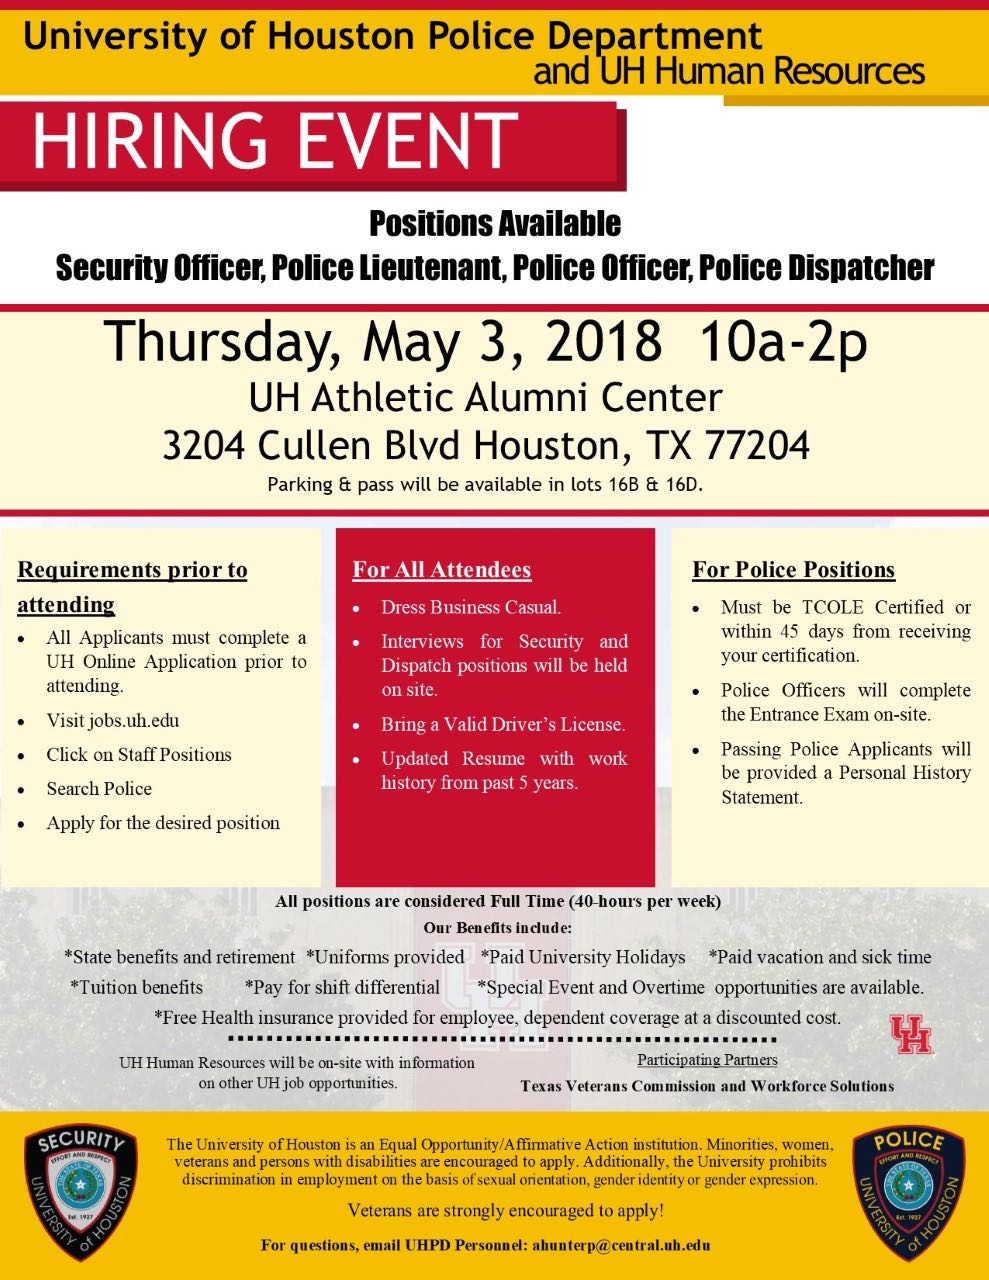 University of Houston Hiring Event